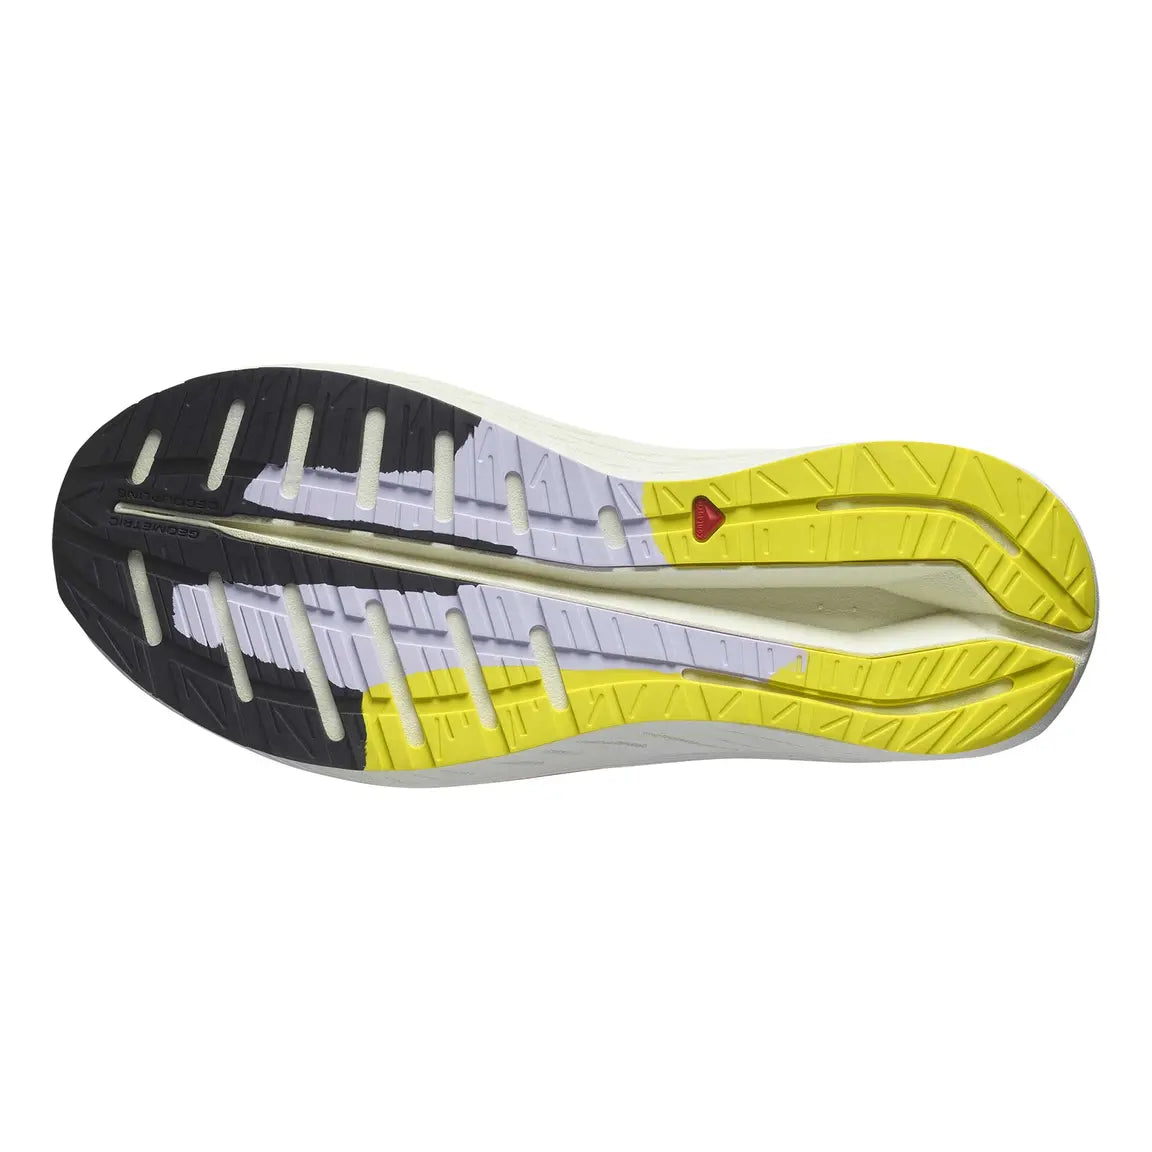 Salomon - Aero Volt 2 - sulfur / opetal / vanilla - chaussures de running homme